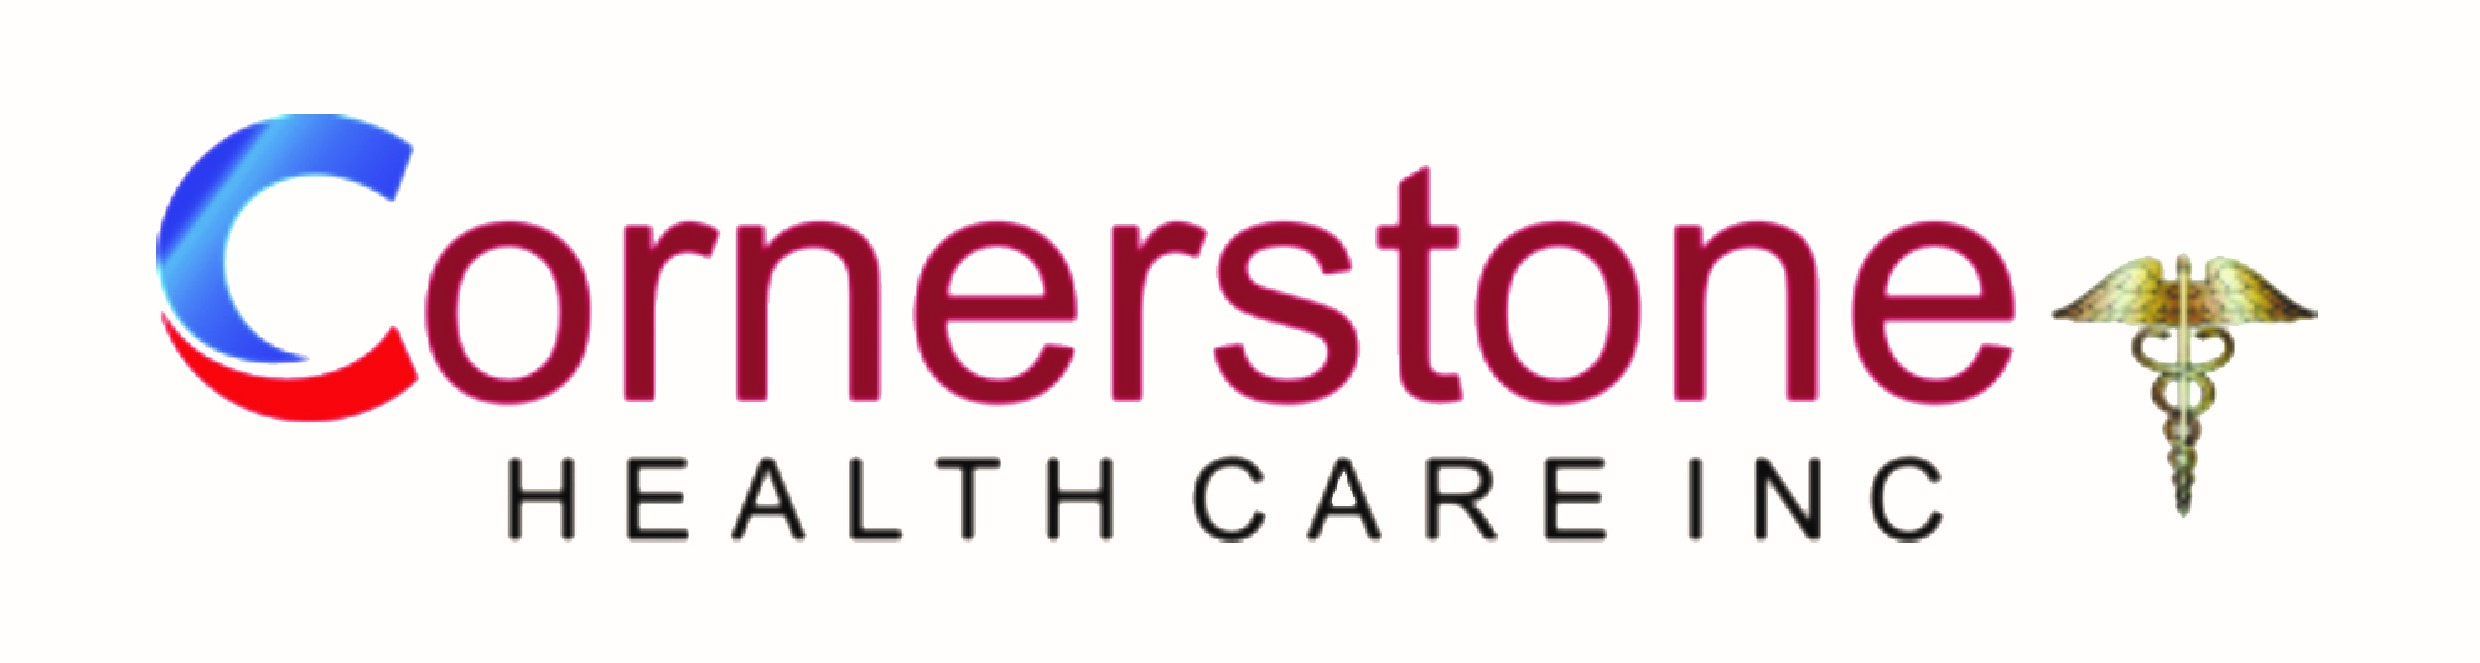 Cornerstone Health Care